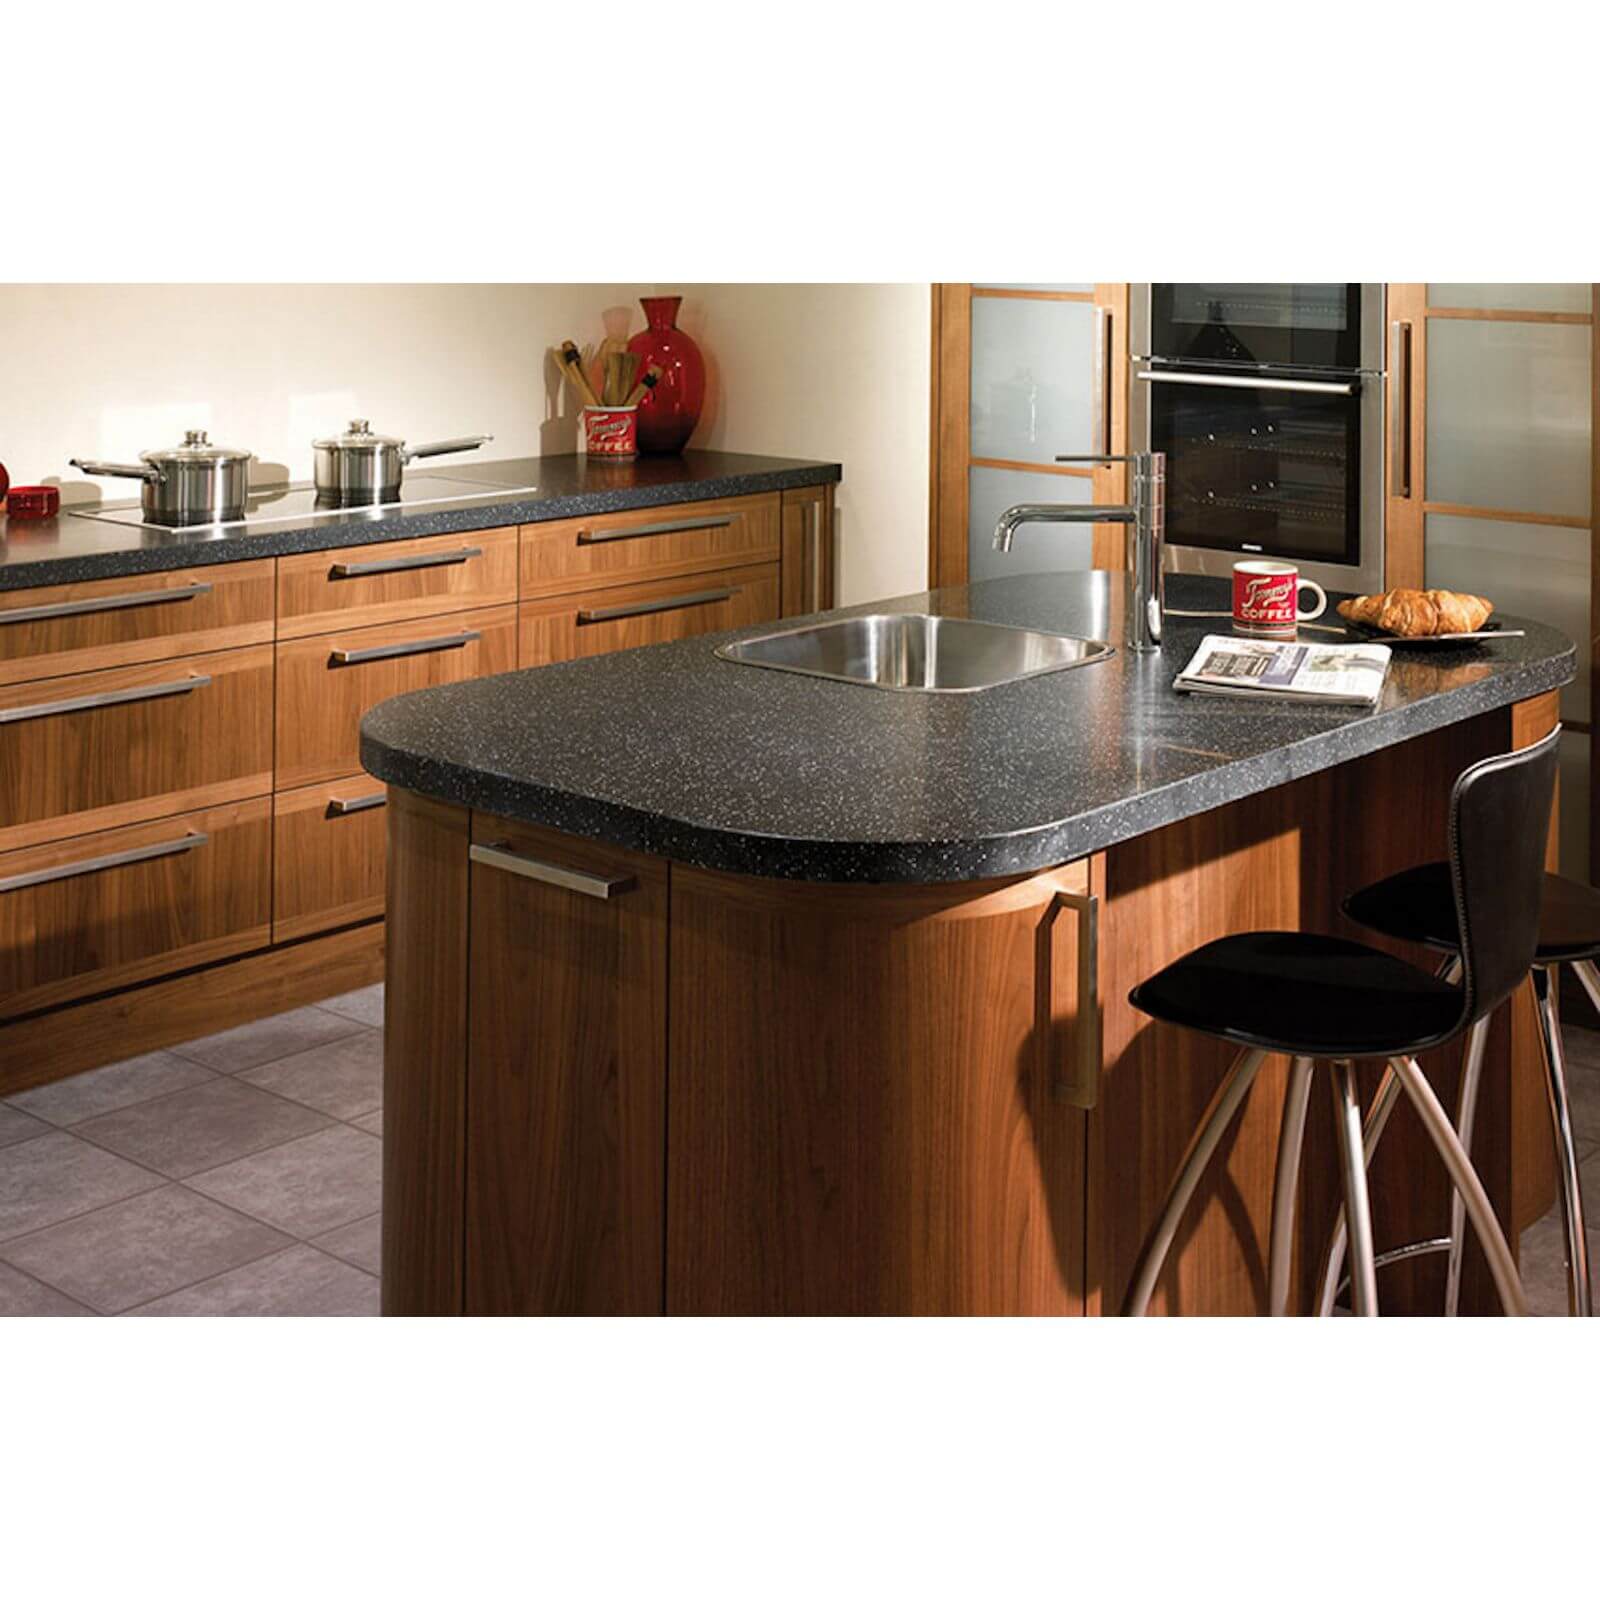 Maia Vulcano Kitchen Sink Worktop - Universal Super Large Bowl - 3600 x 600 x 42mm